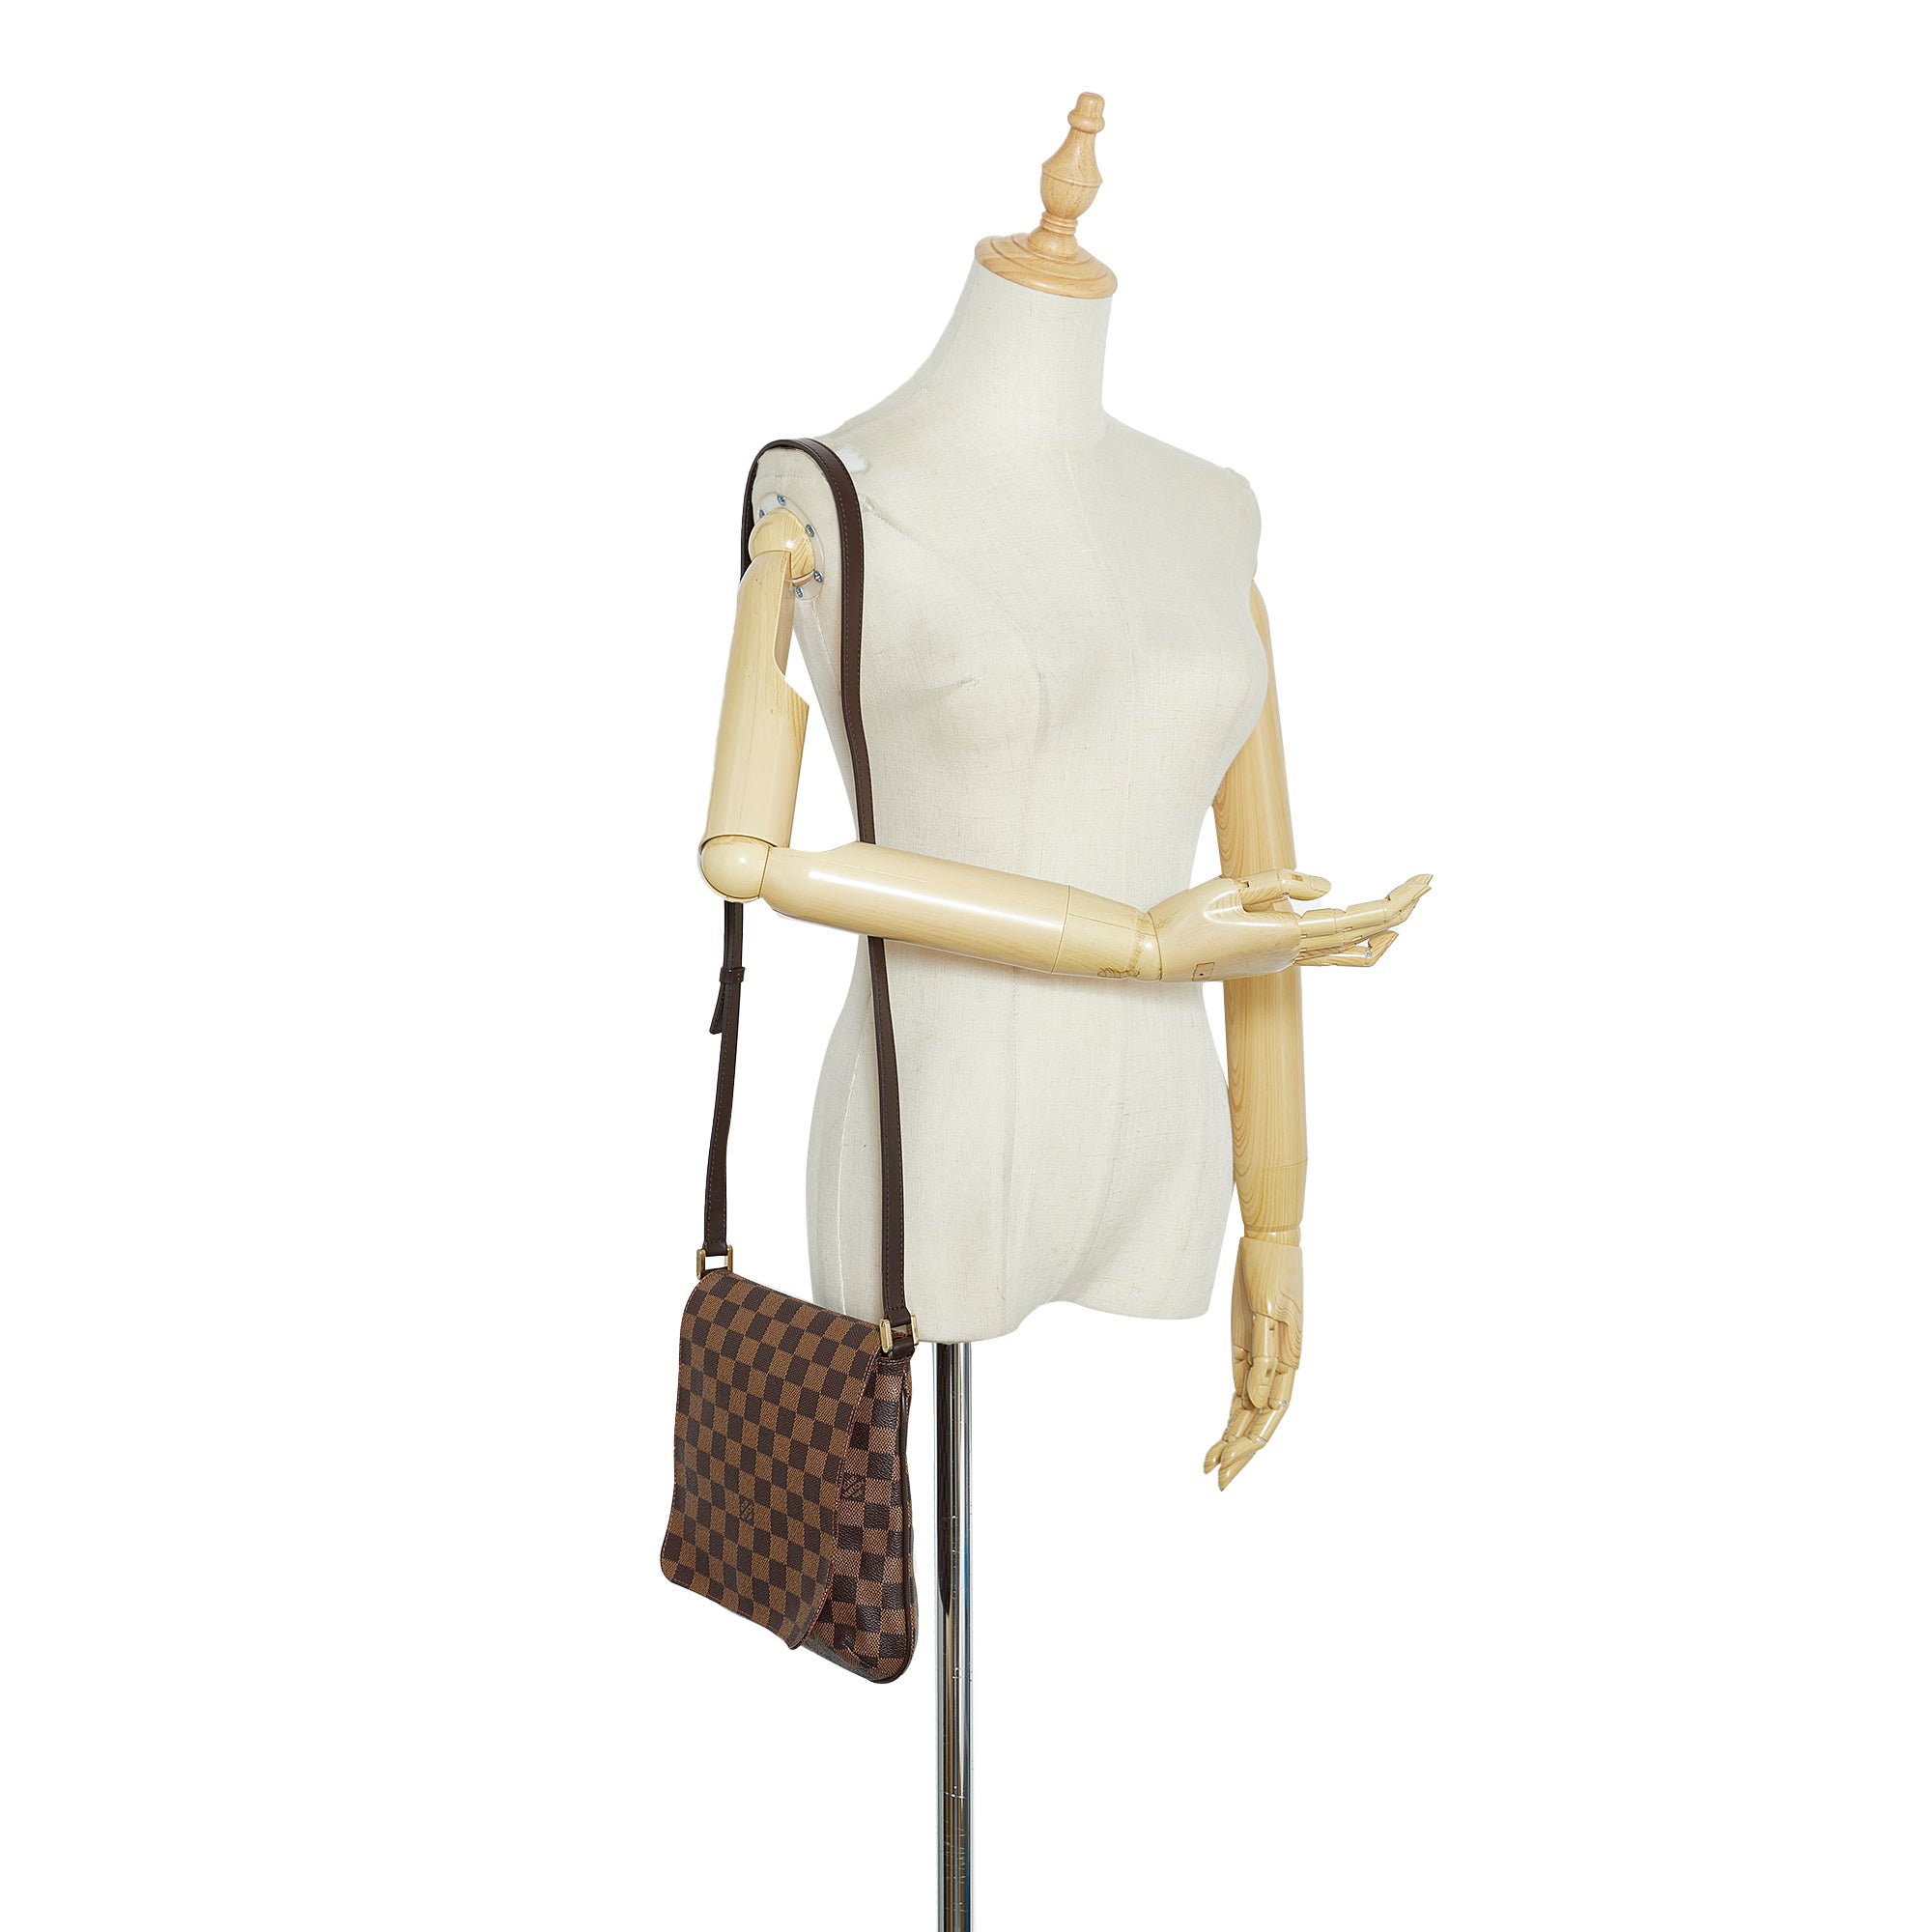 Louis Vuitton Damier Ebene Musette Salsa GM - Brown Crossbody Bags